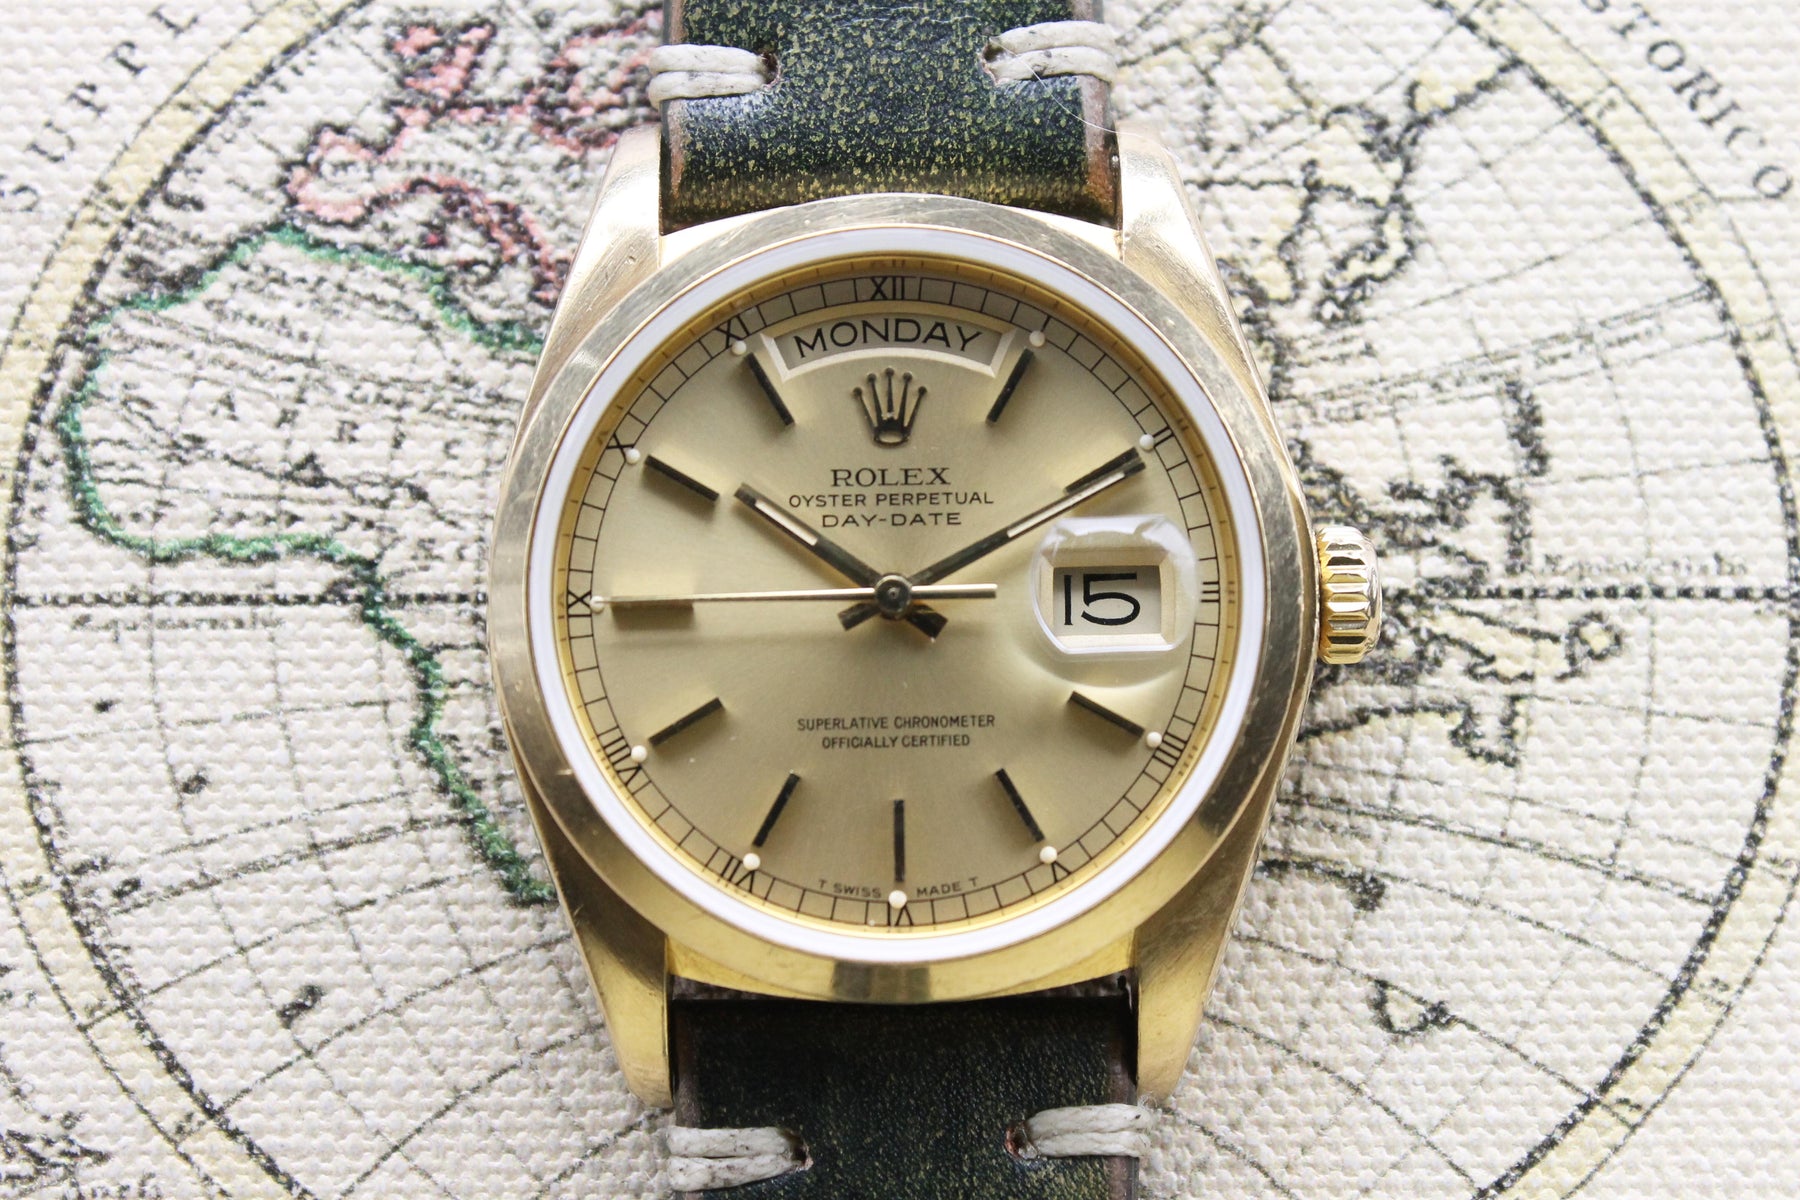 1979 Rolex Day Date Ref. 18028